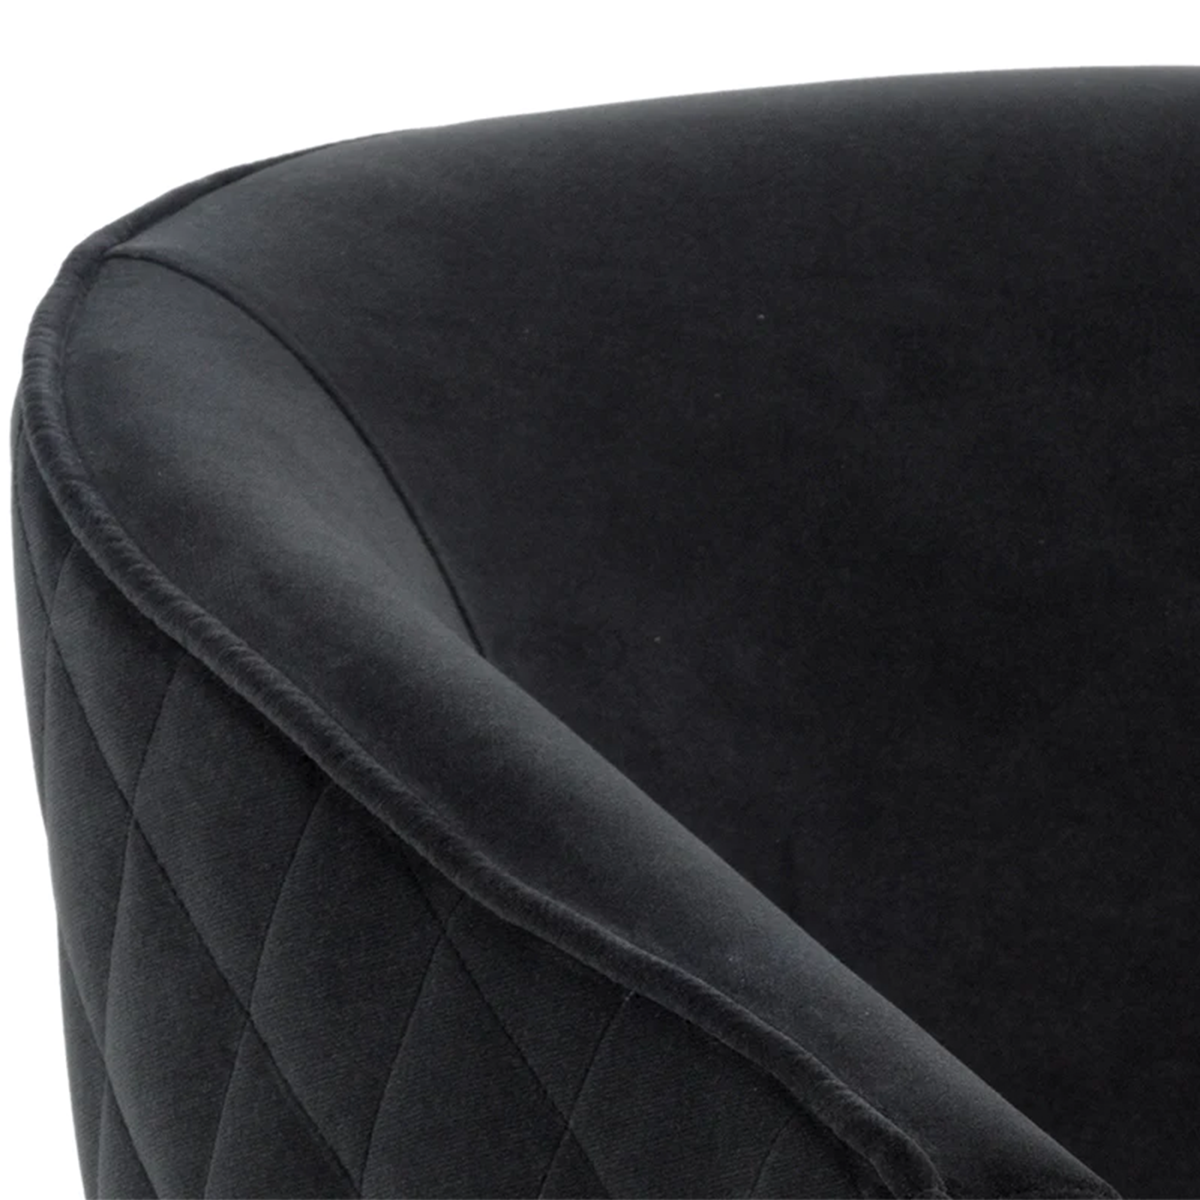 Cornella Lounge Chair by Sunpan Material closeup image